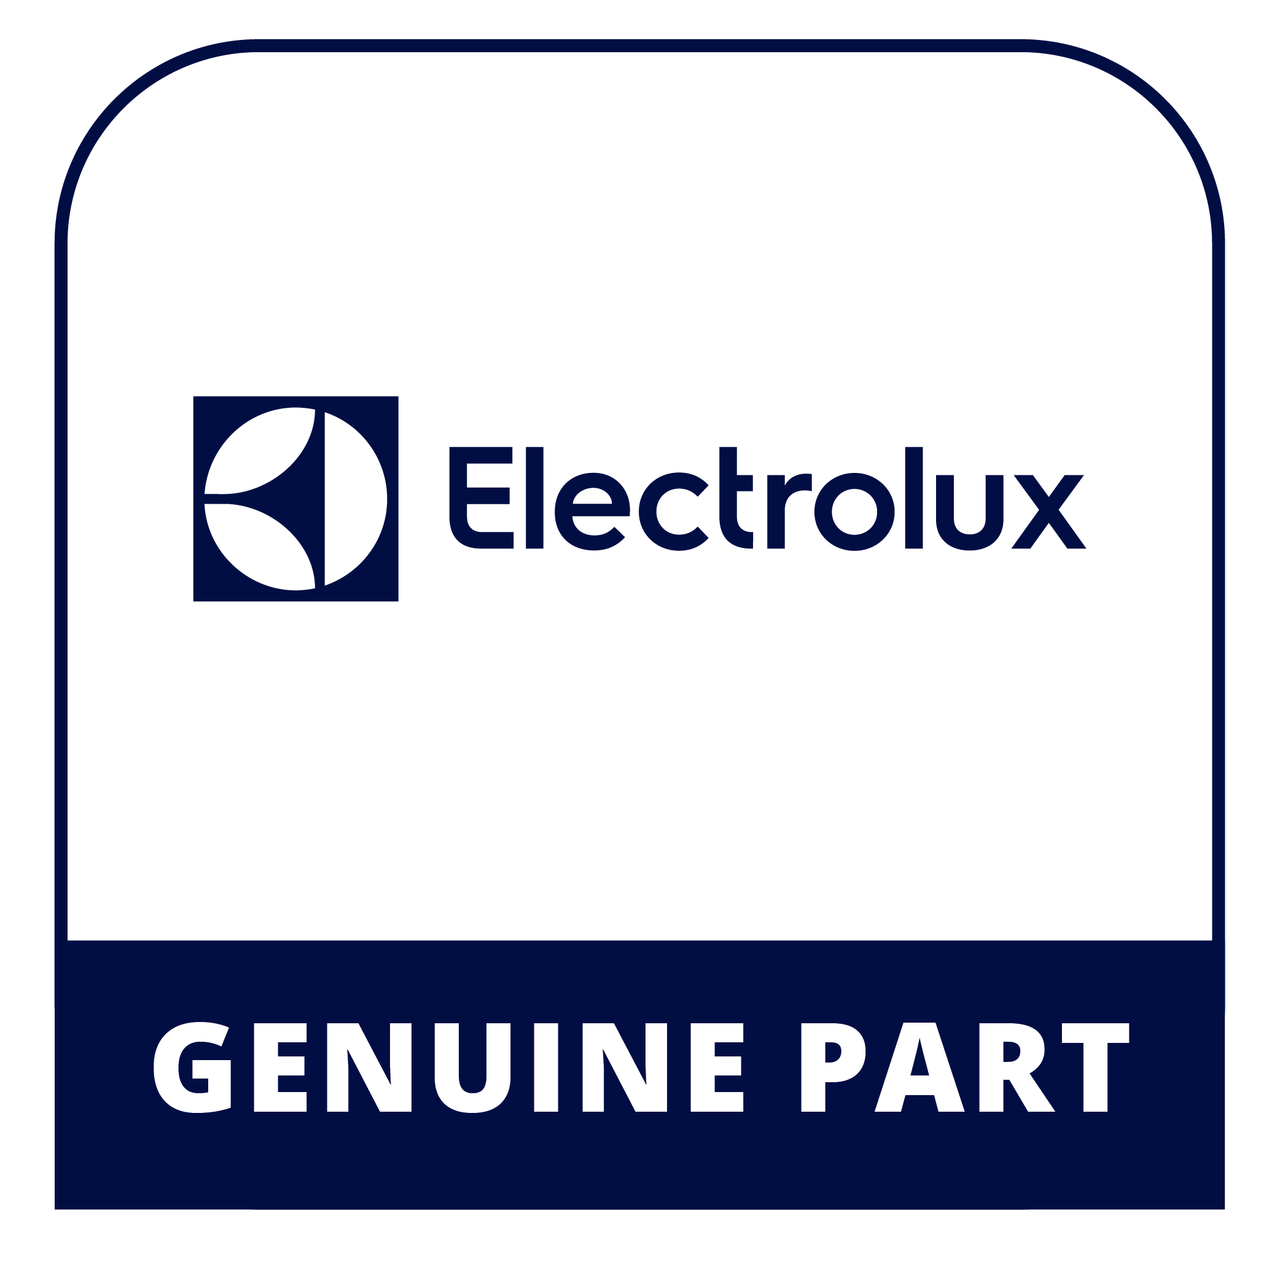 Frigidaire - Electrolux 5304497387 Cover - Genuine Electrolux Part